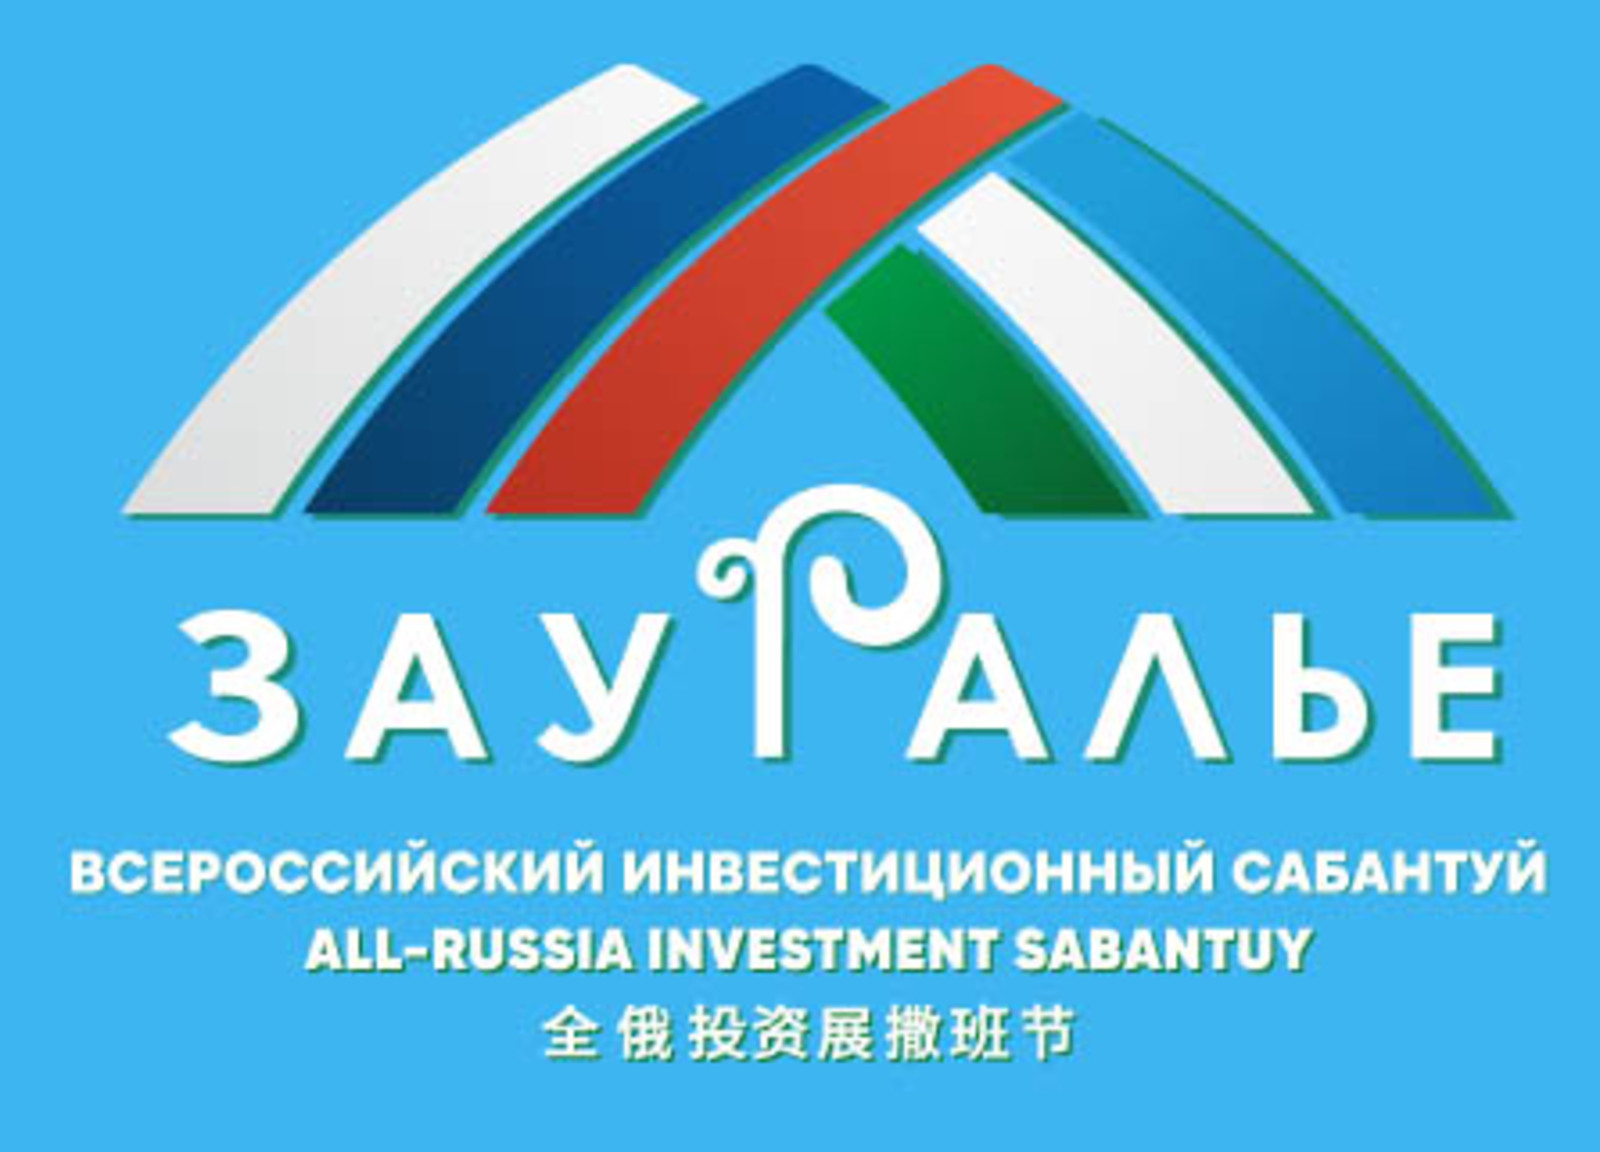 В Башкирии на инвестсабантуе подписали 9 соглашений о сотрудничестве в сфере придорожного сервиса